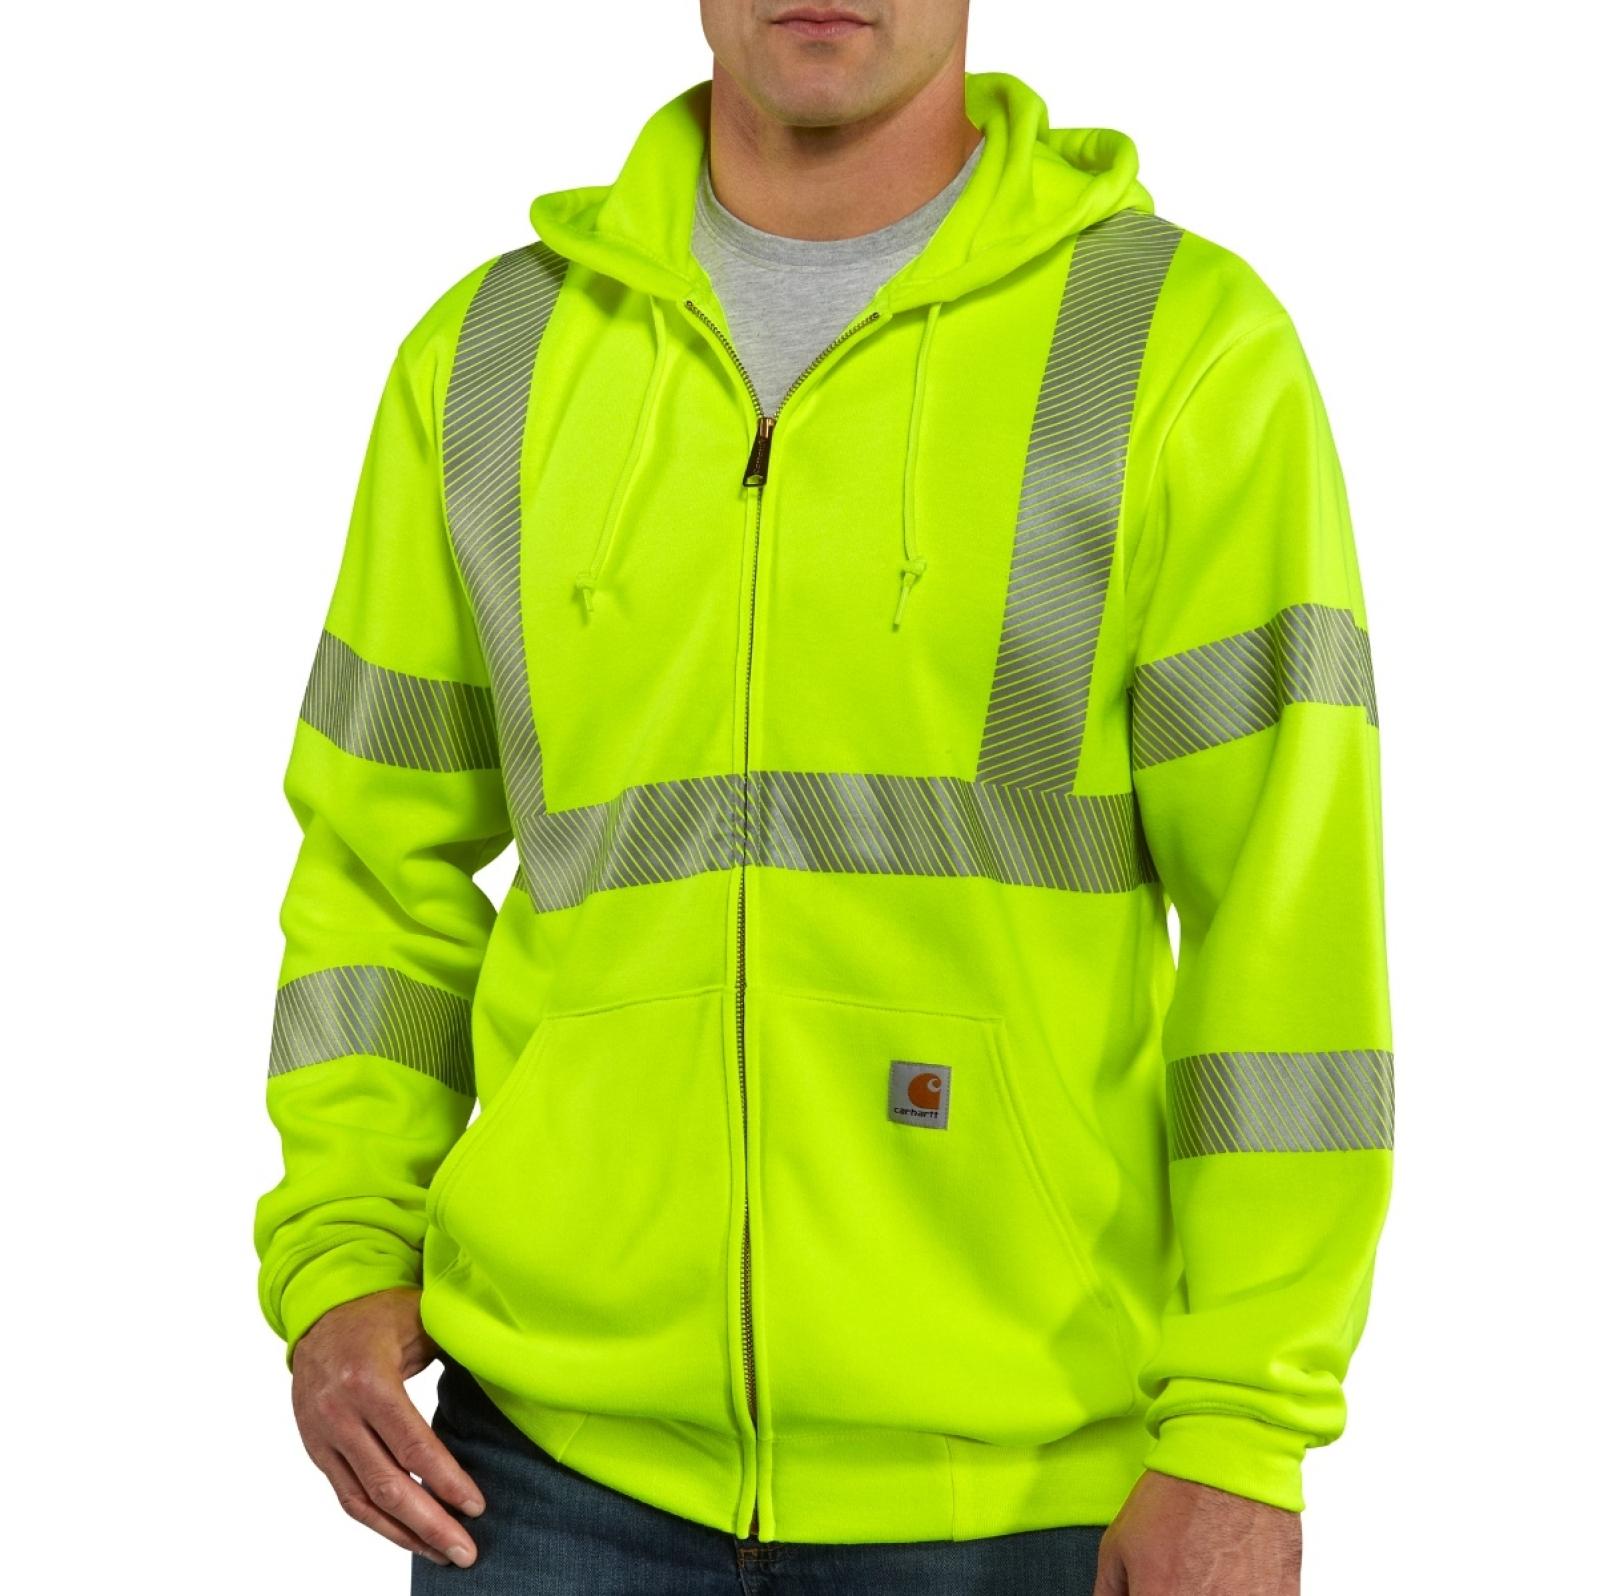 Carhartt Force® High-Visibility Zip-Front Class 3 Sweatshirt